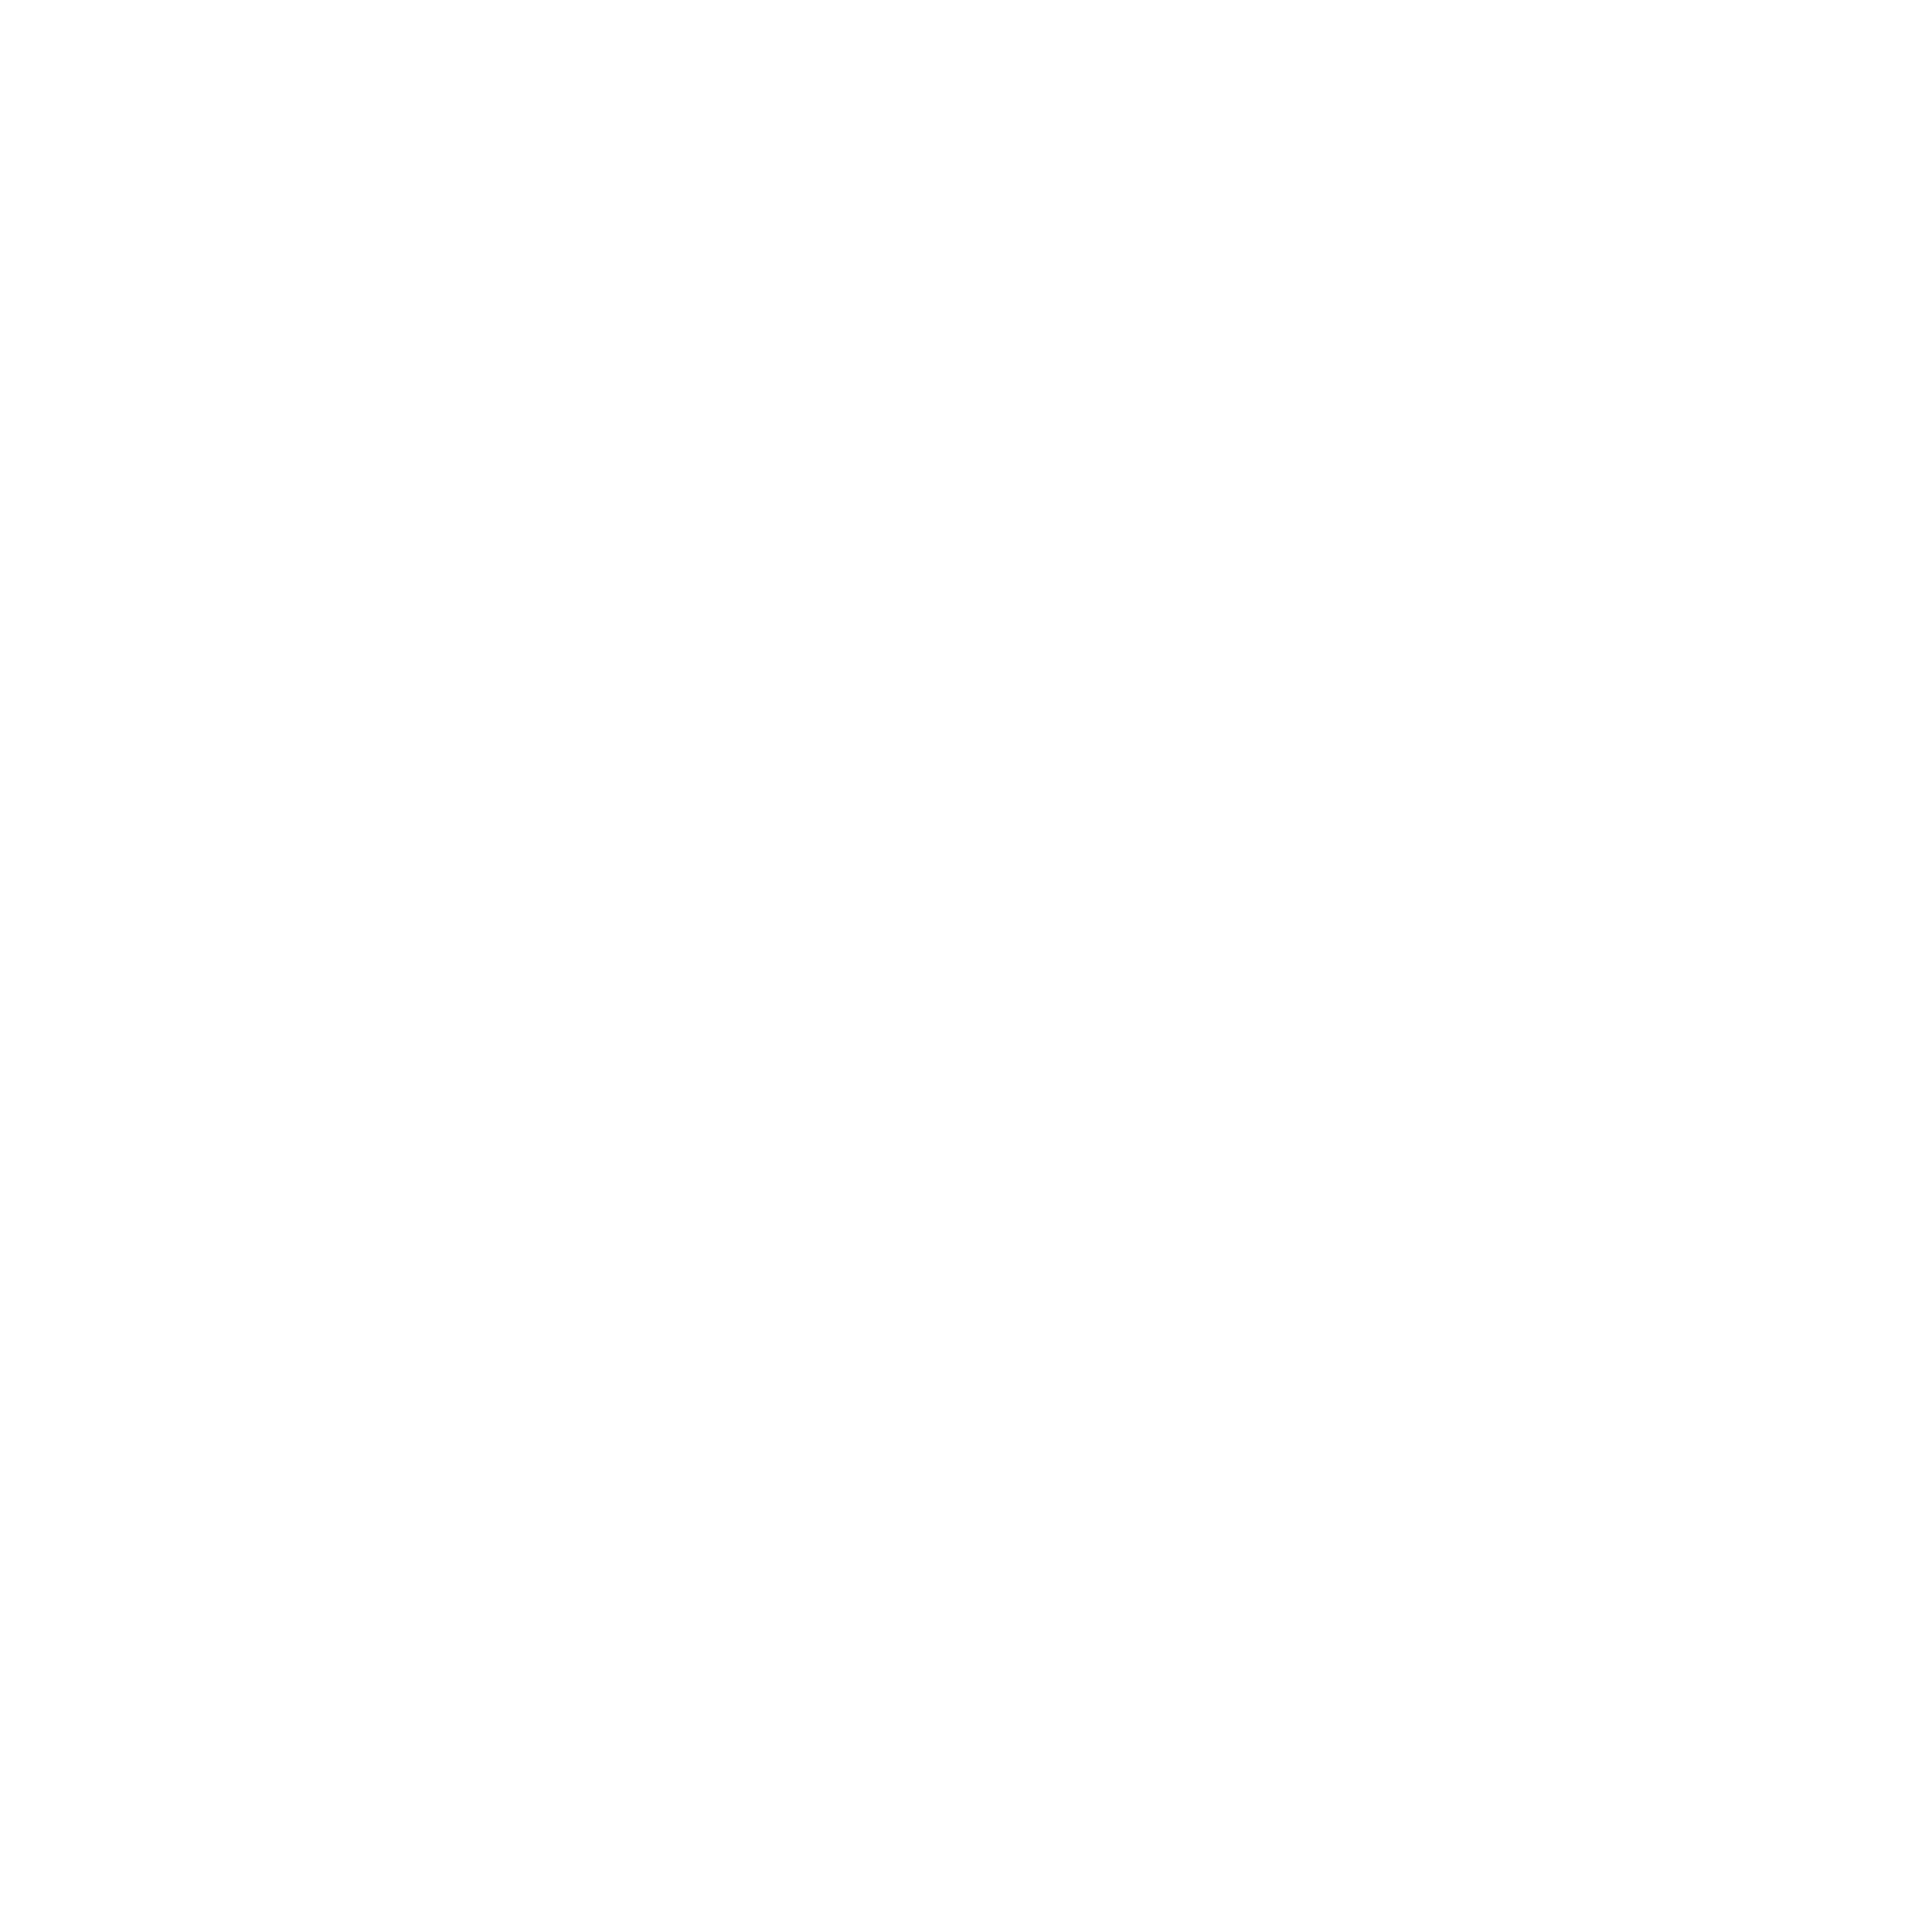 Travel Channel Logo - Travel Channel Logo PNG Transparent & SVG Vector - Freebie Supply